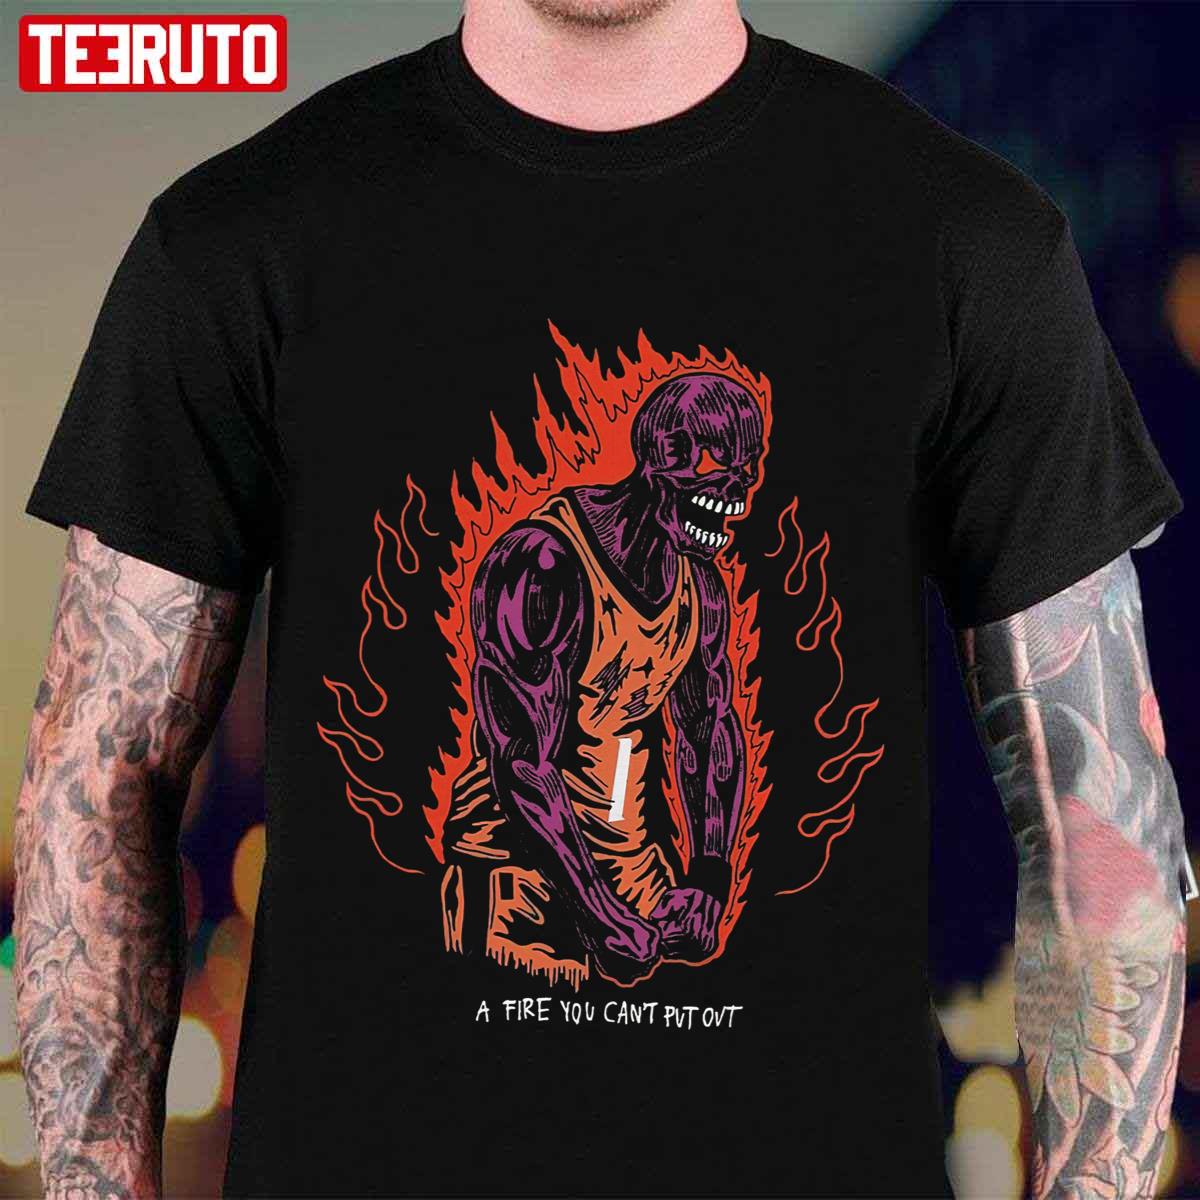 Suns X Warren Lotas the Final Shot Purple Skeleton T-shirt Suns in